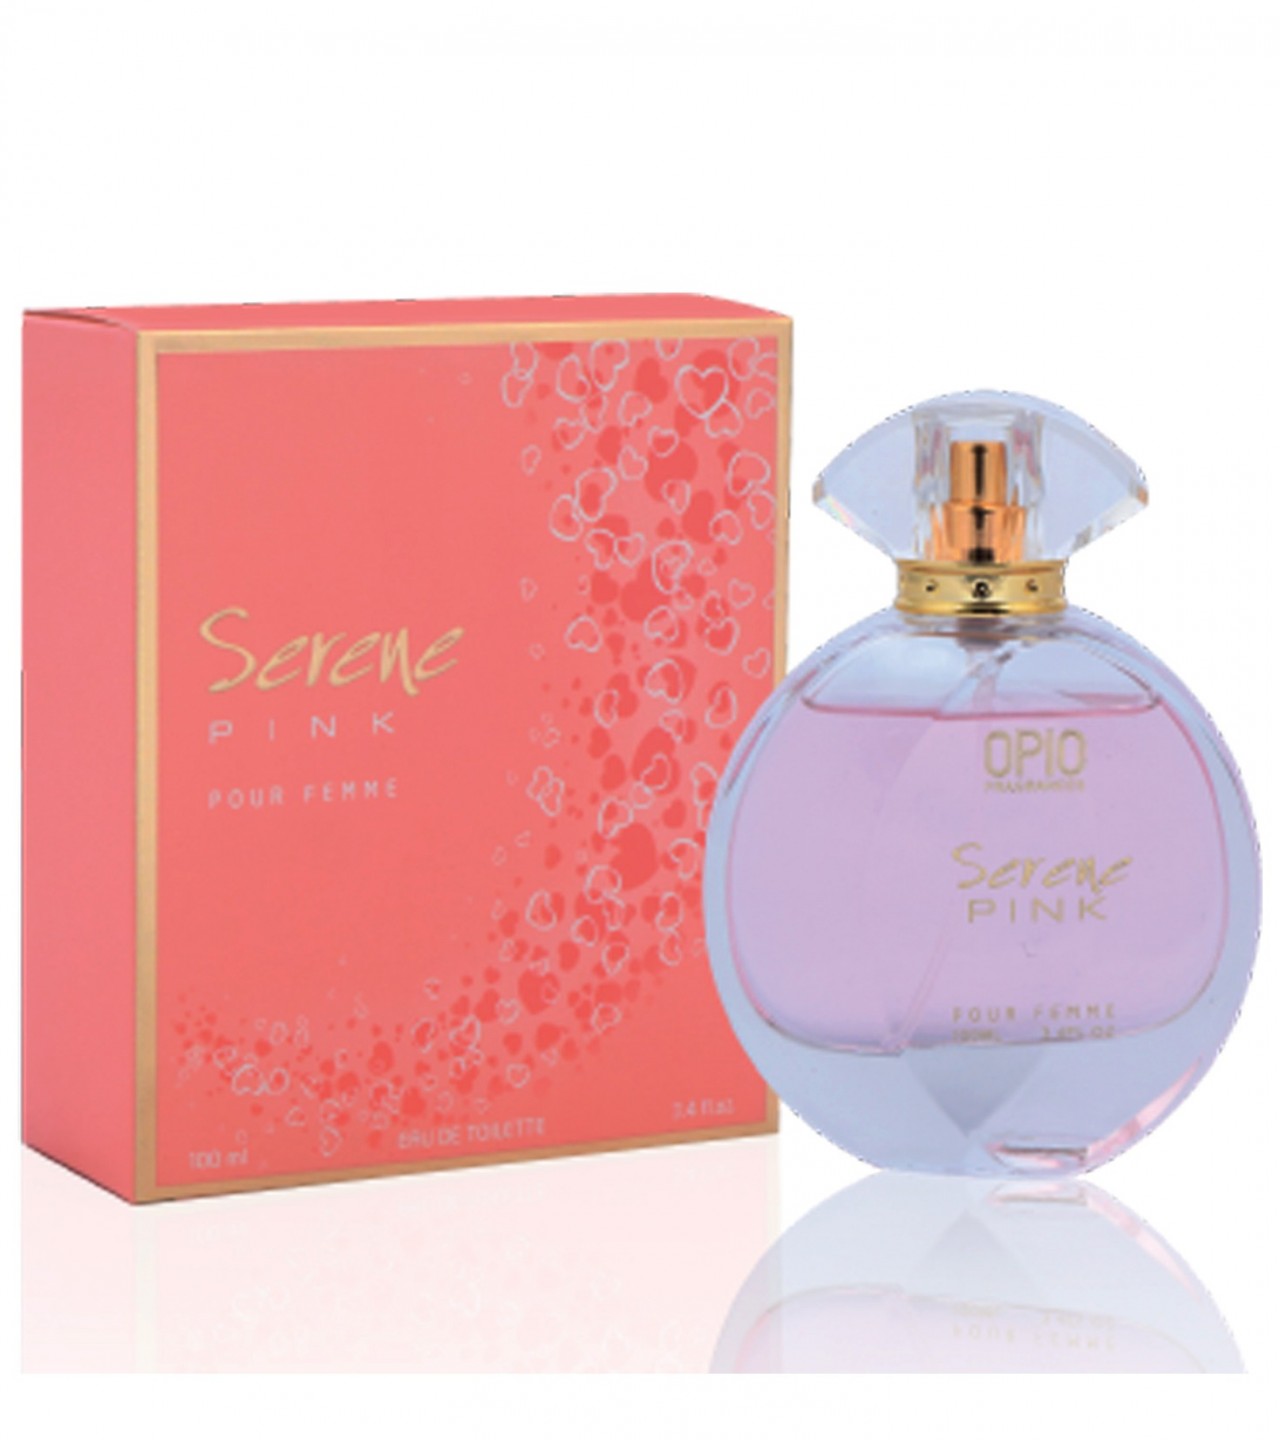 Opio SERENE PINK Perfume For Women - Eau De Parfum - 100 ml